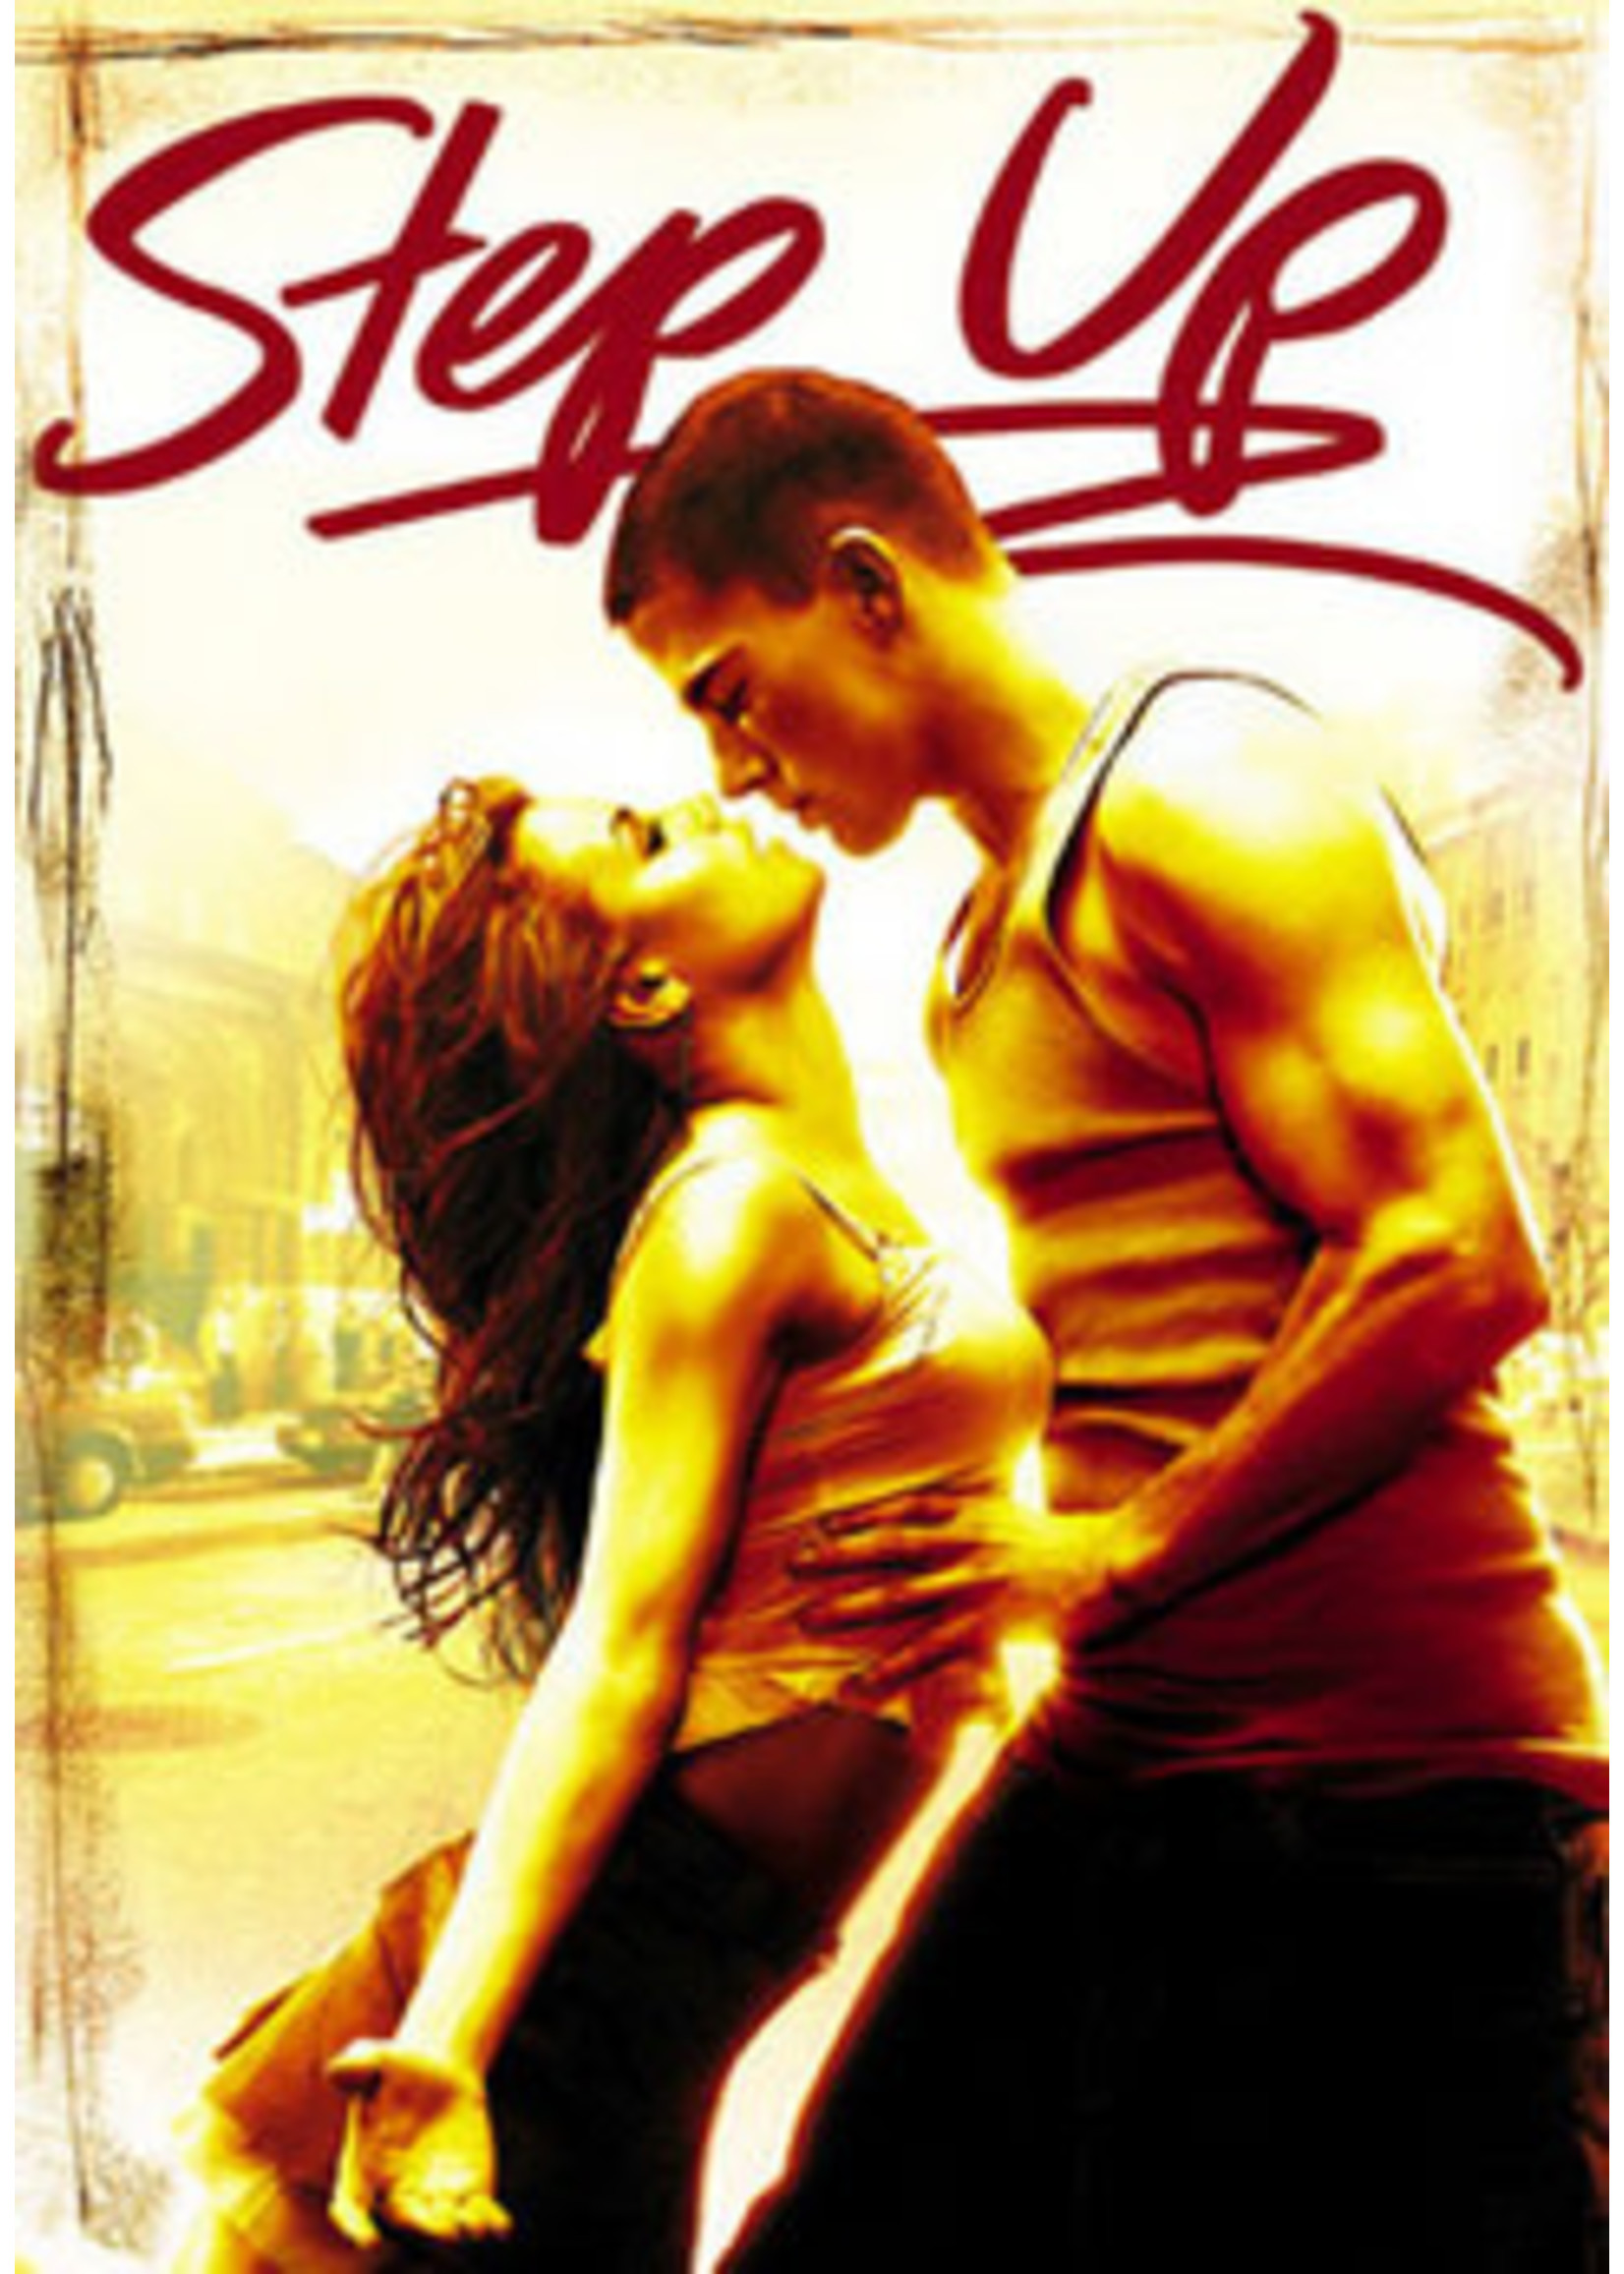 Step up (DVD)